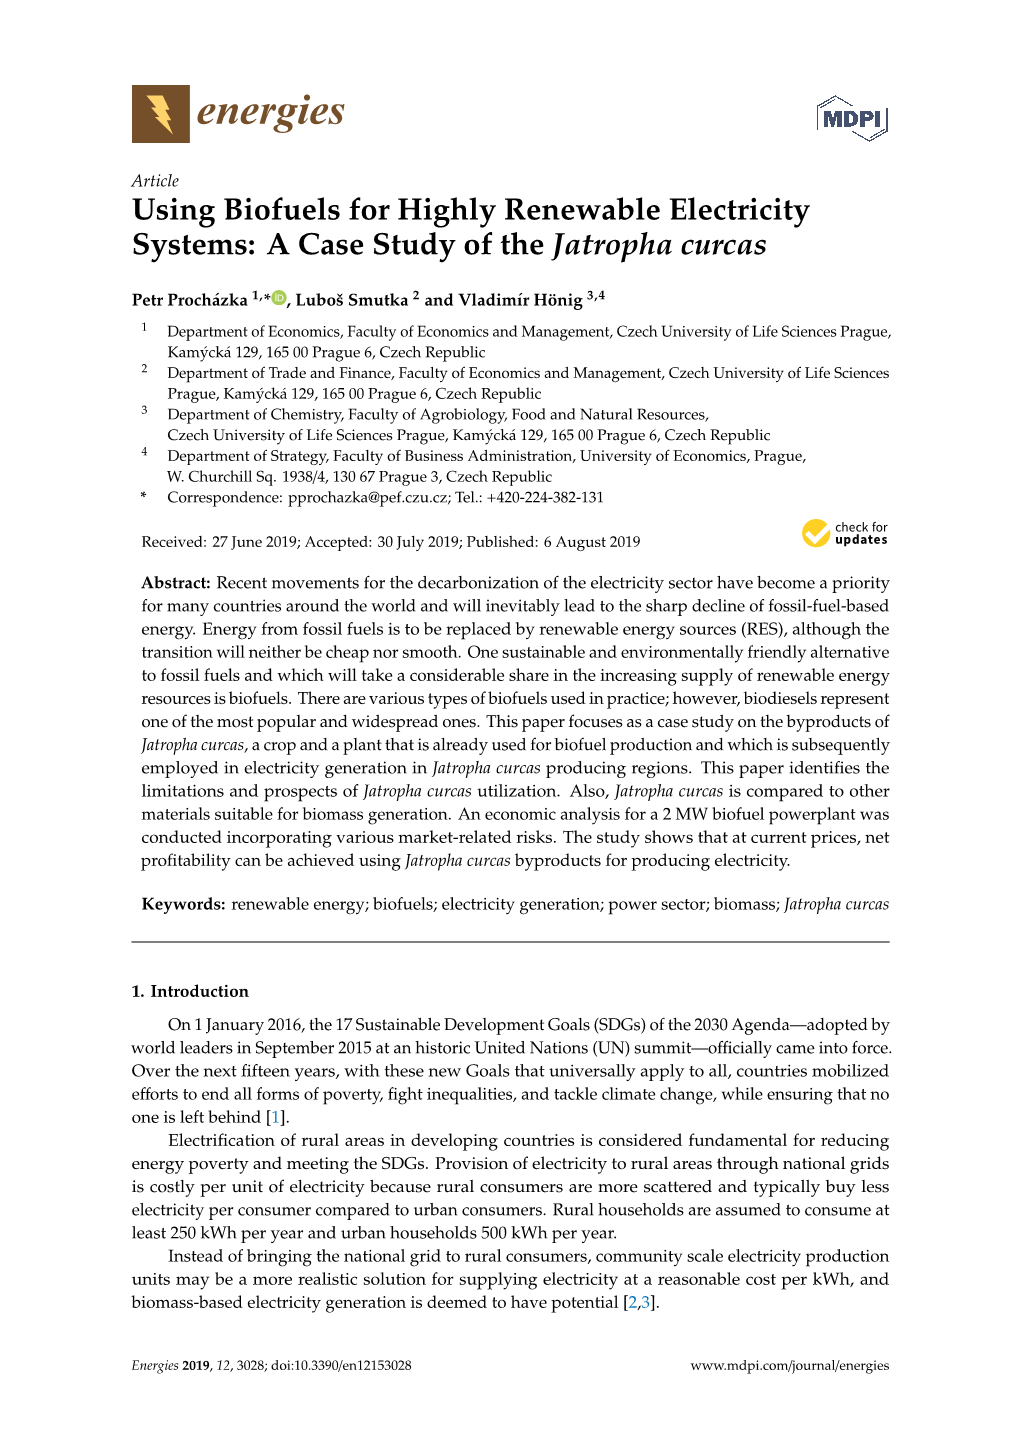 A Case Study of the Jatropha Curcas